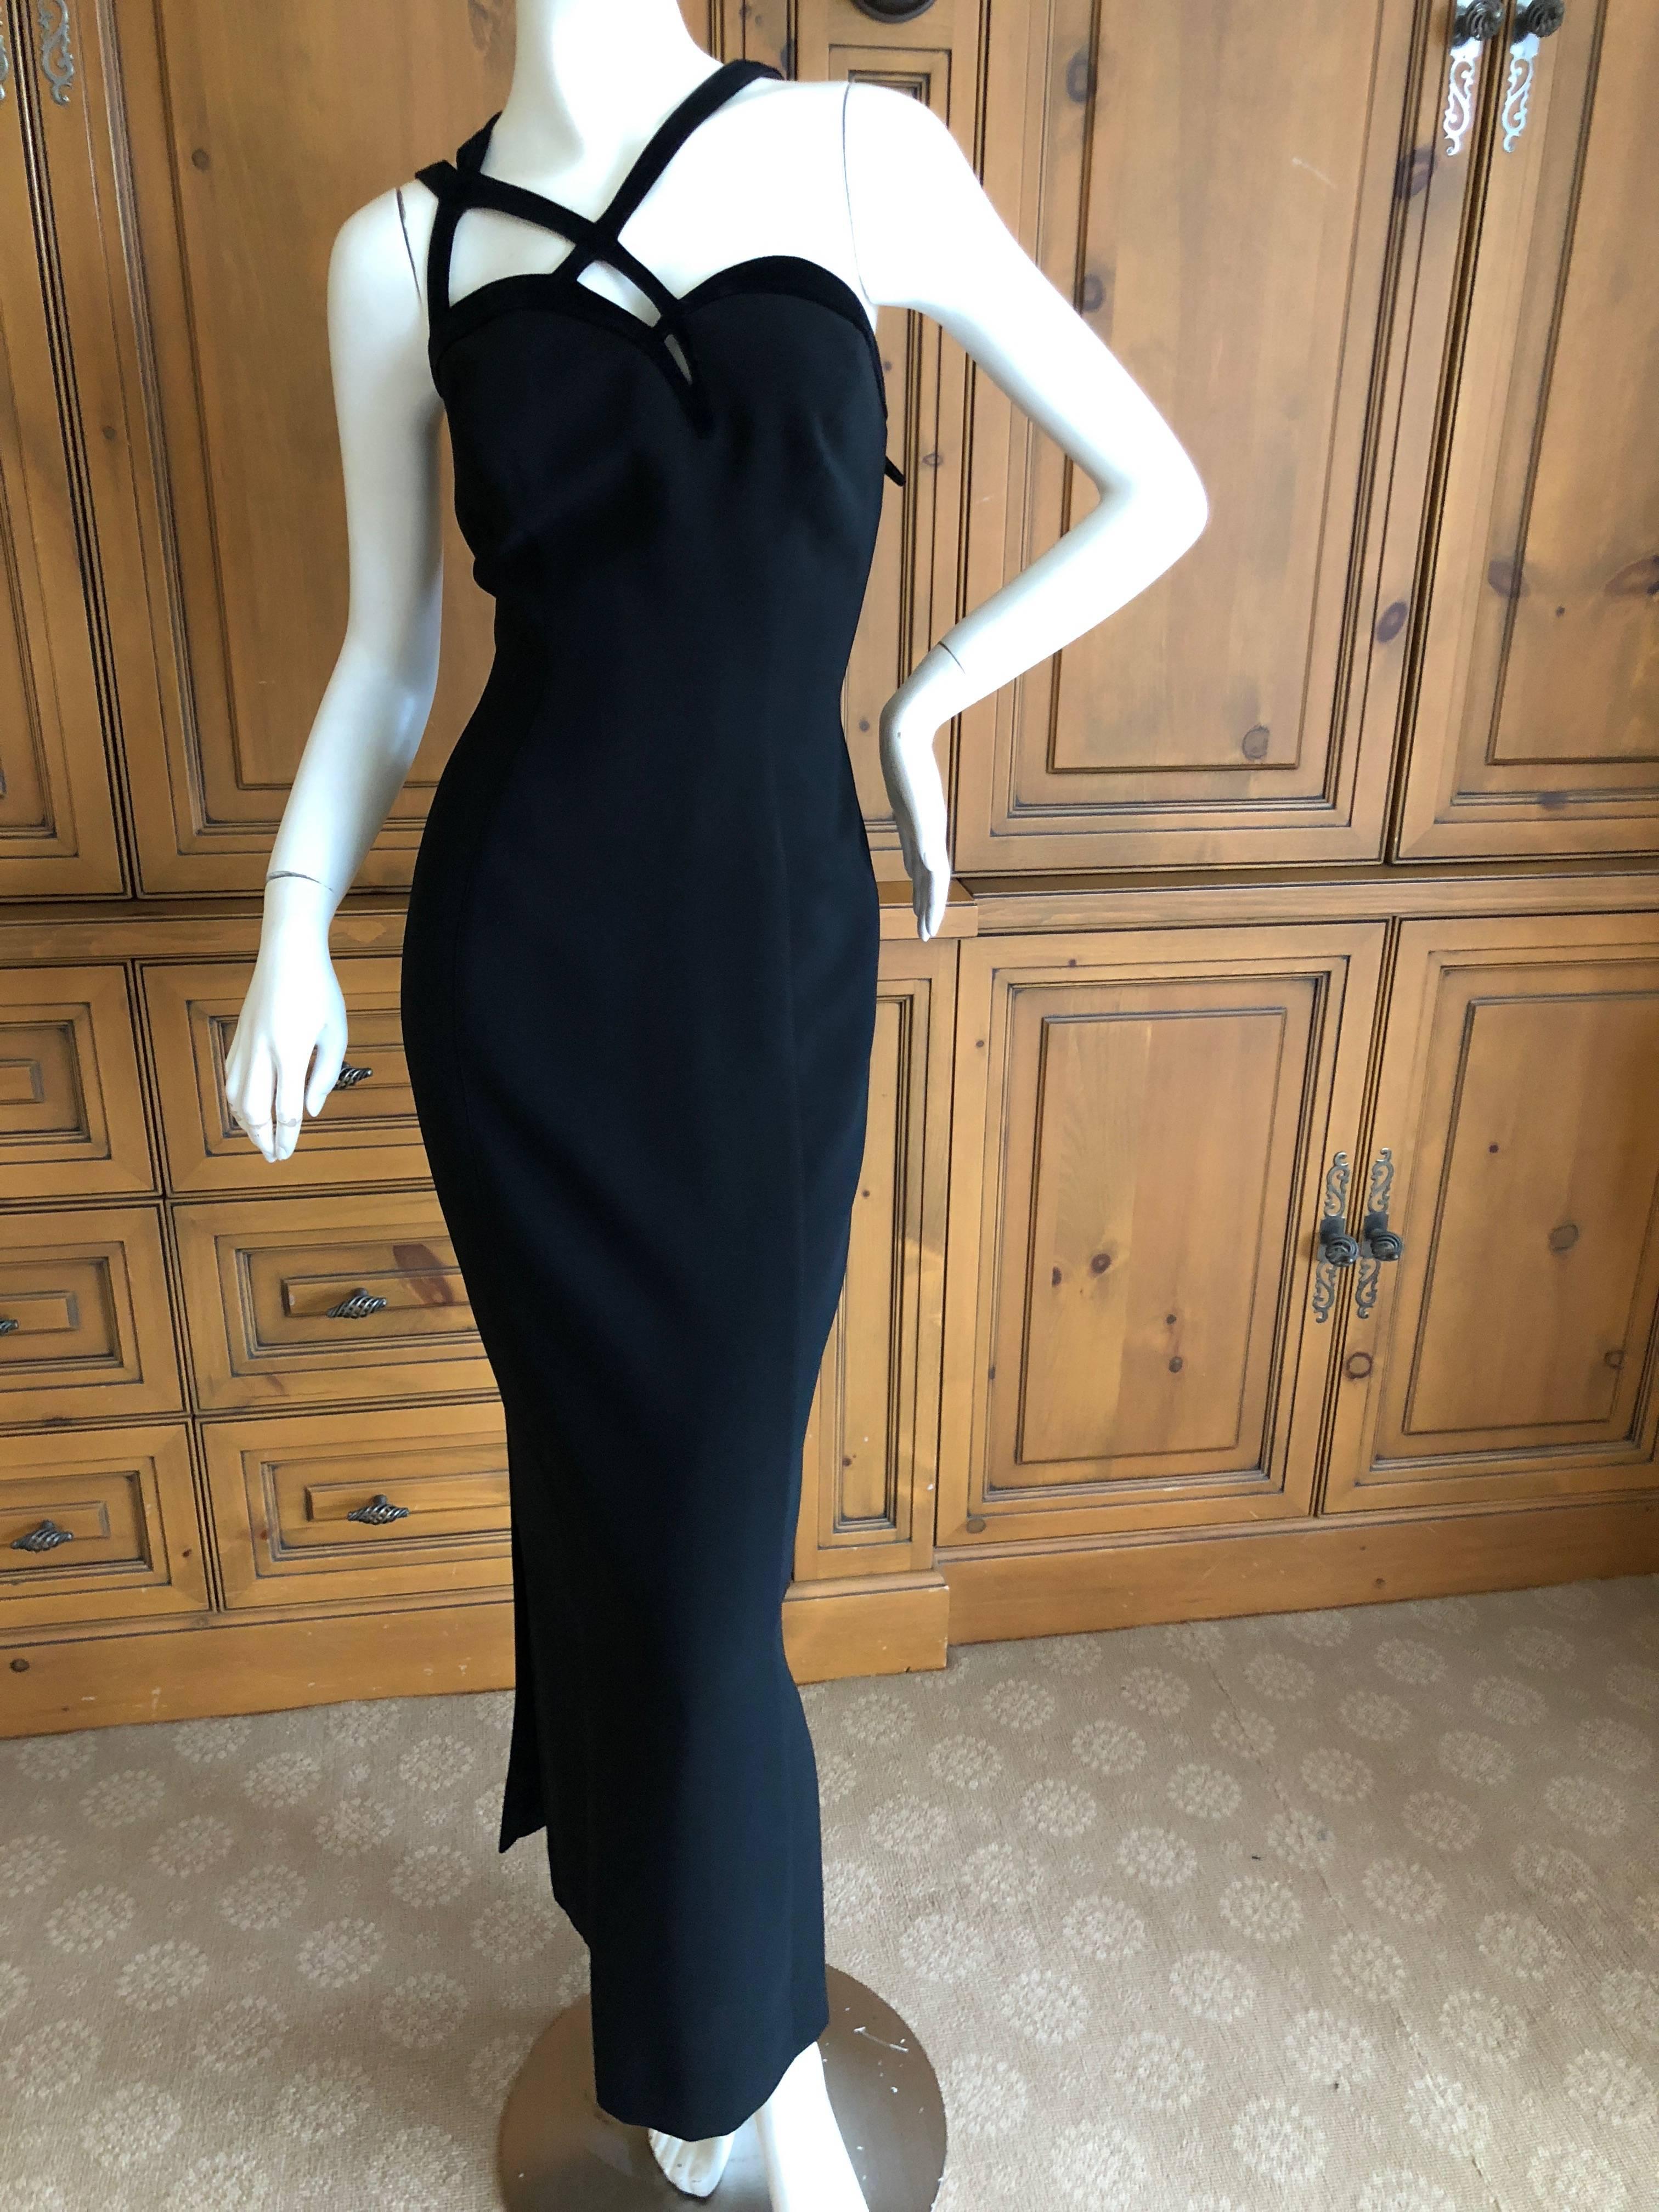 Beautiful black evening dress with velvet trim from Thierry Mugler.
Classic Mugler
Bust 35